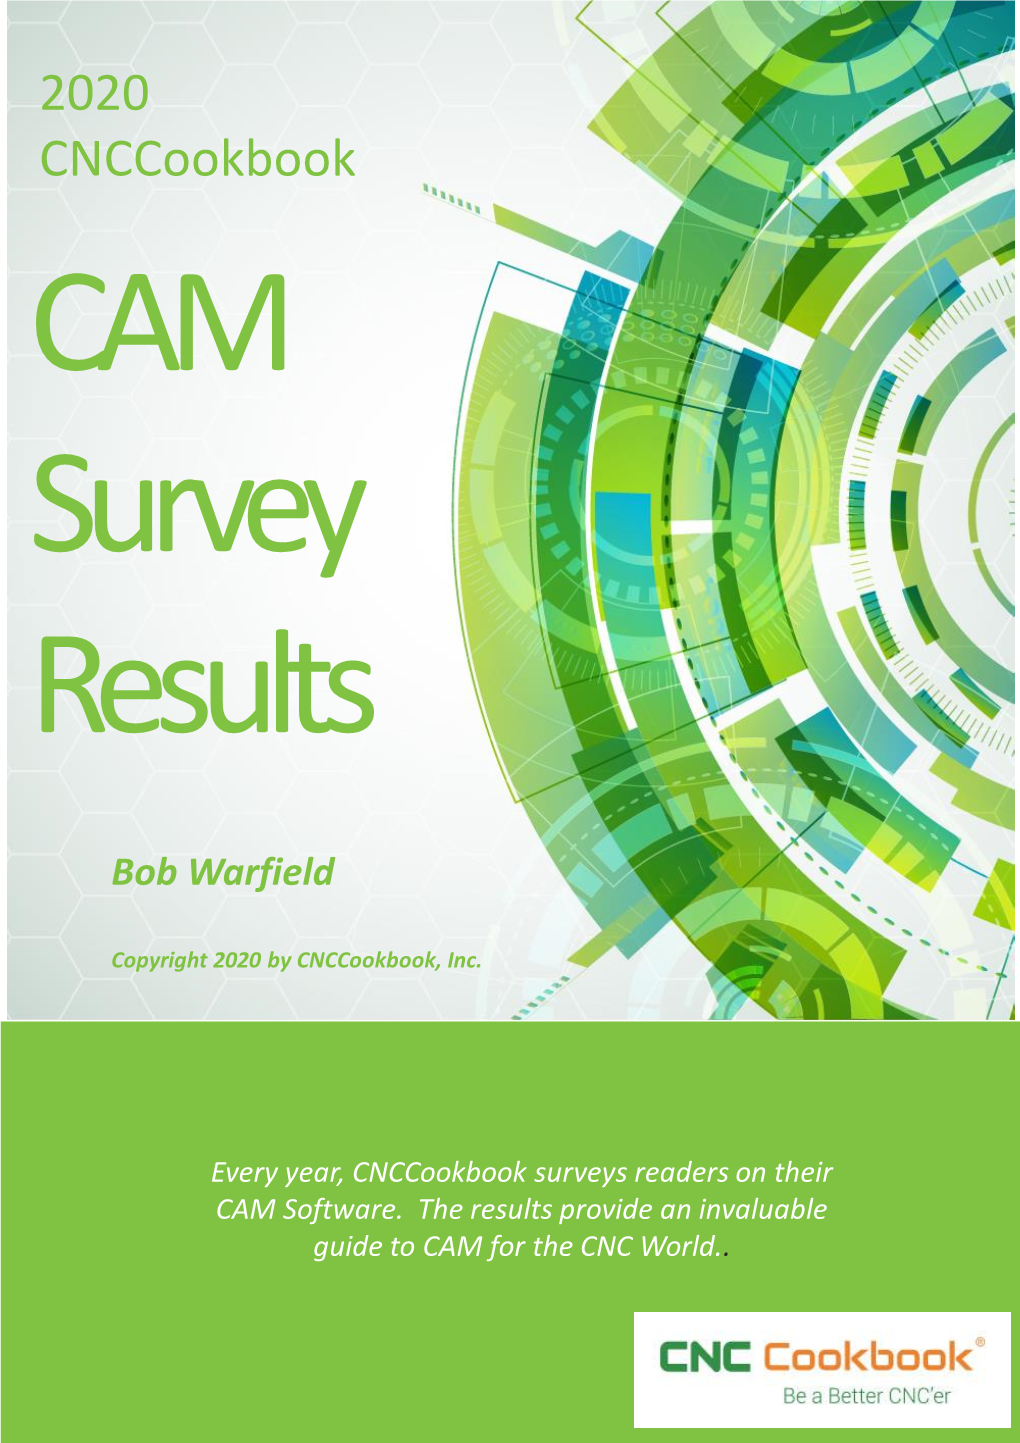 2020 Cnccookbook CAM Survey Results